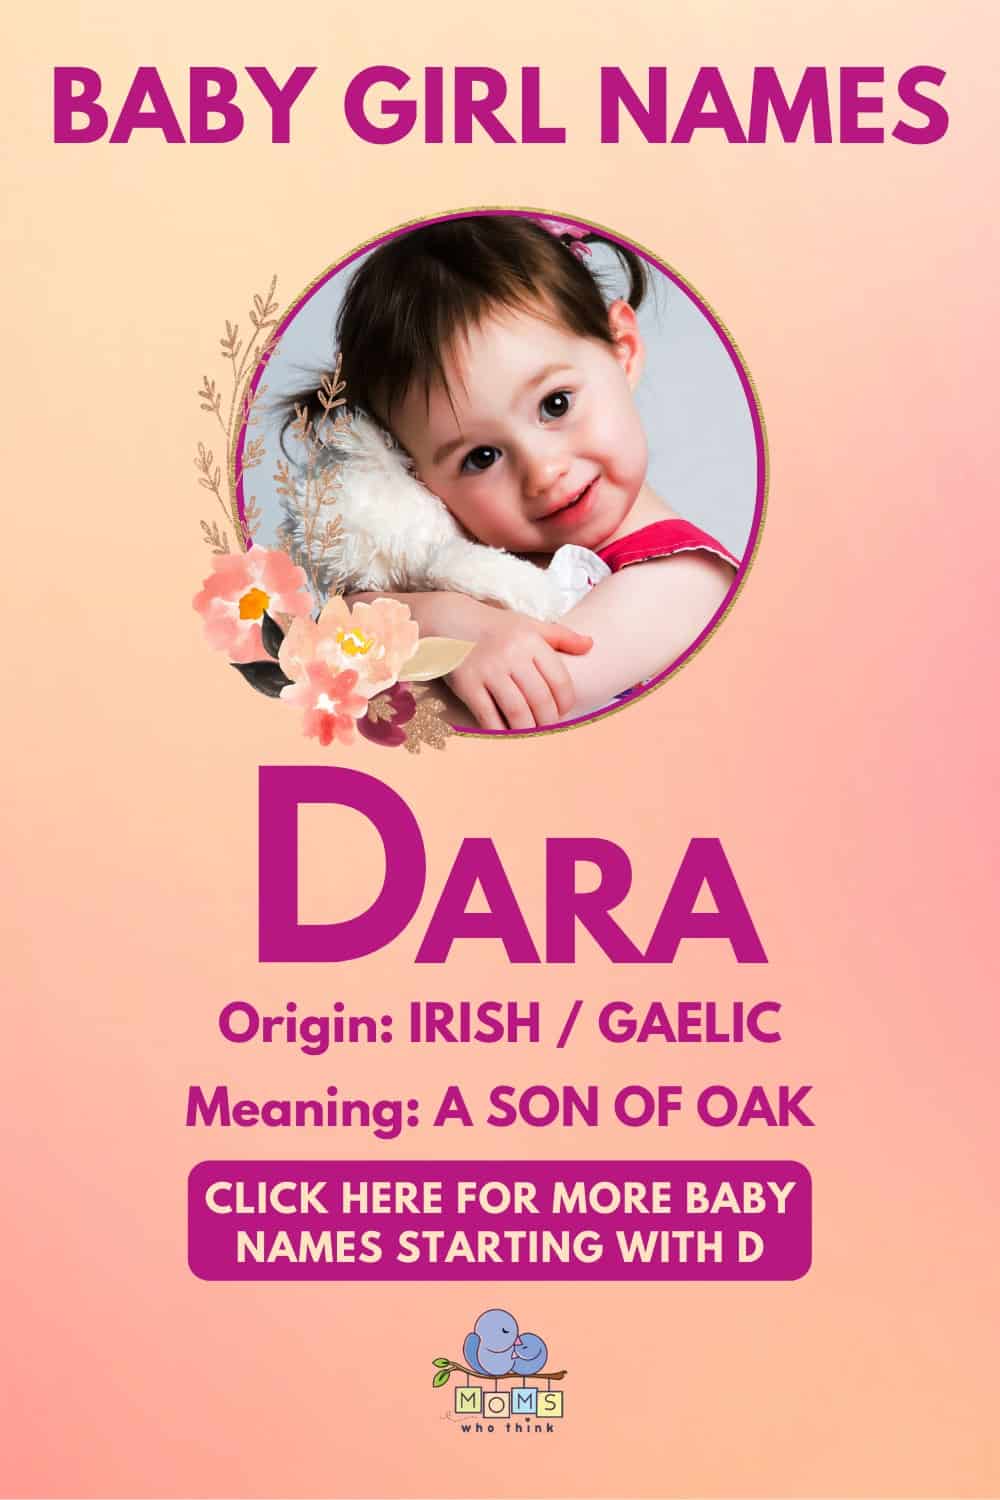 Baby girl name meanings - Dara 1